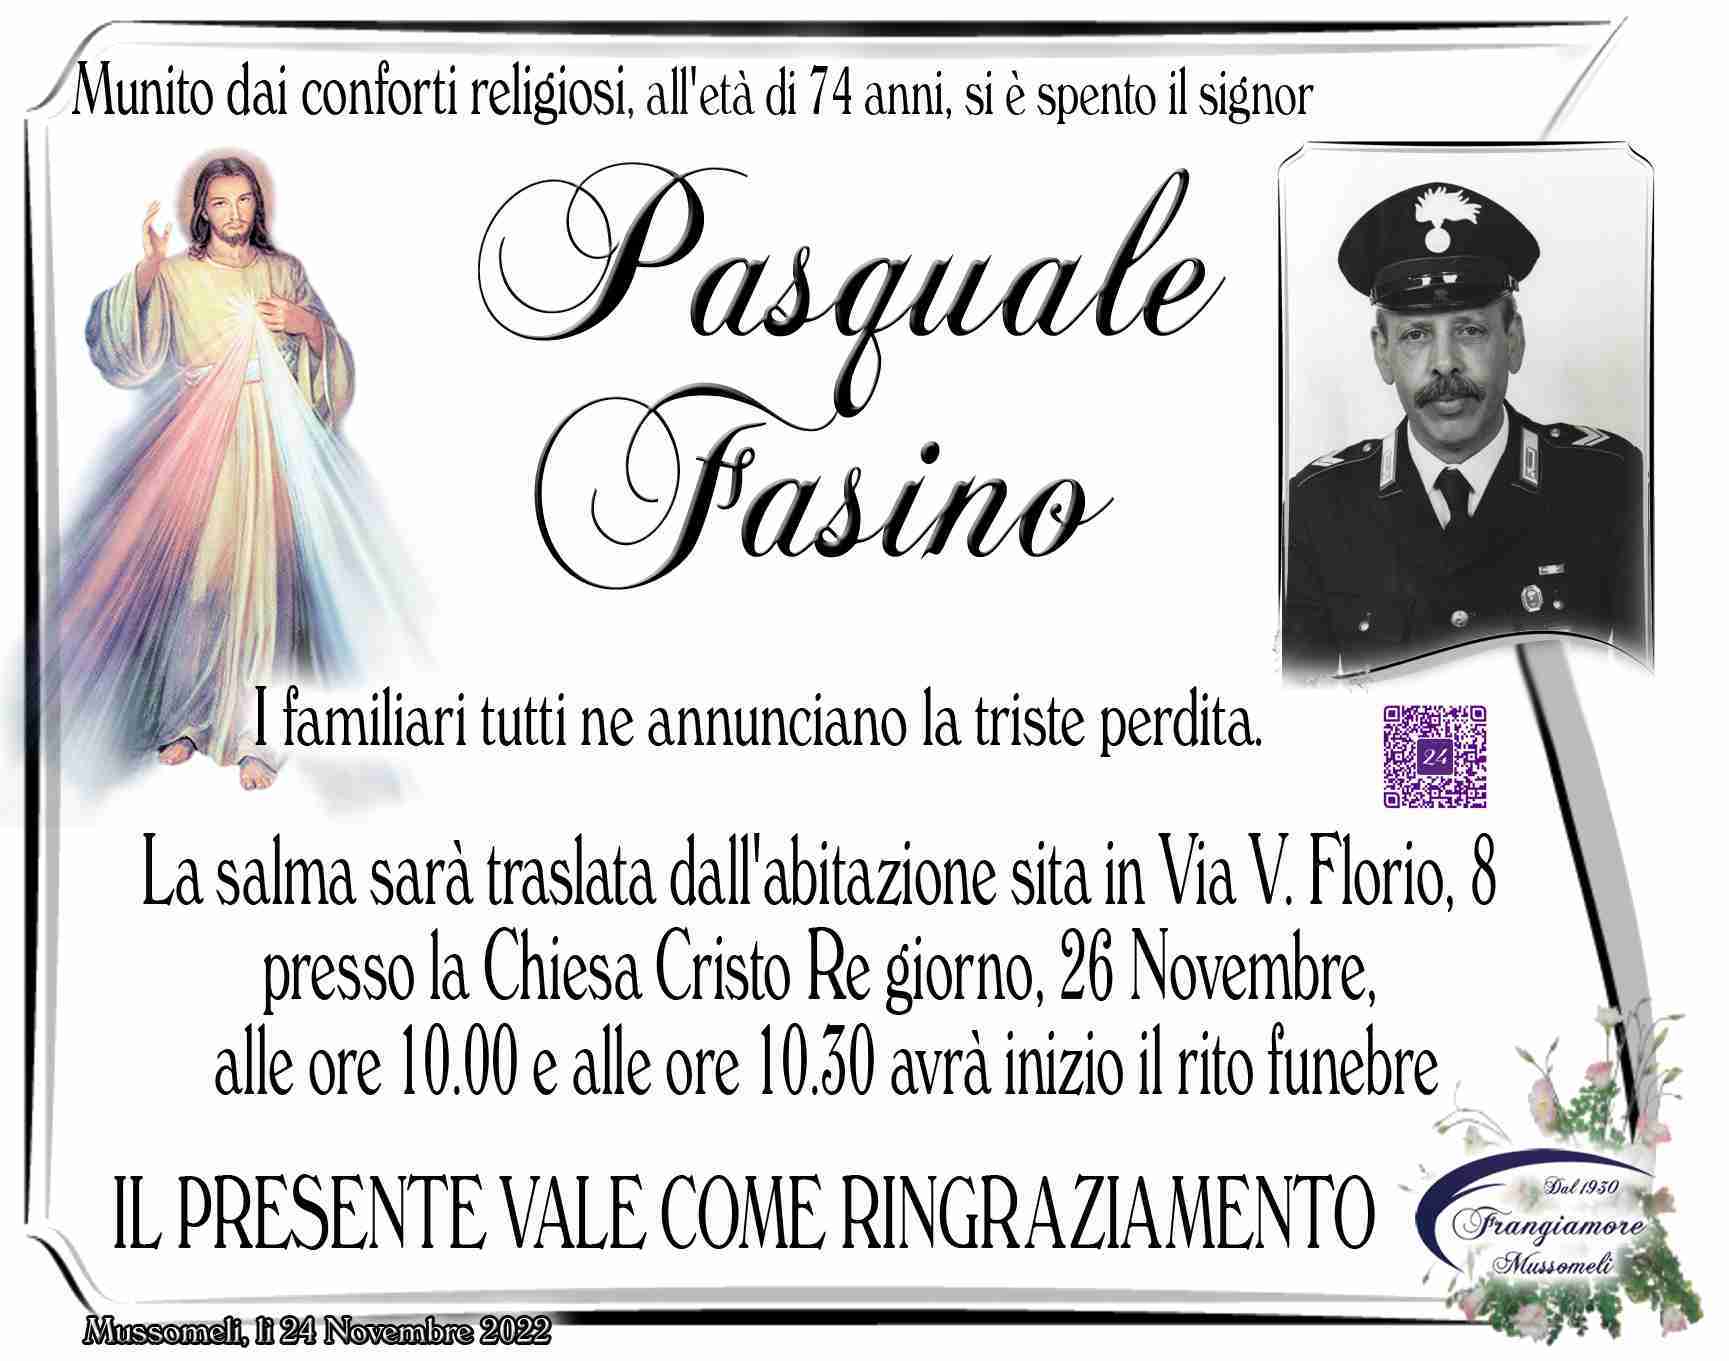 Pasquale Fasino